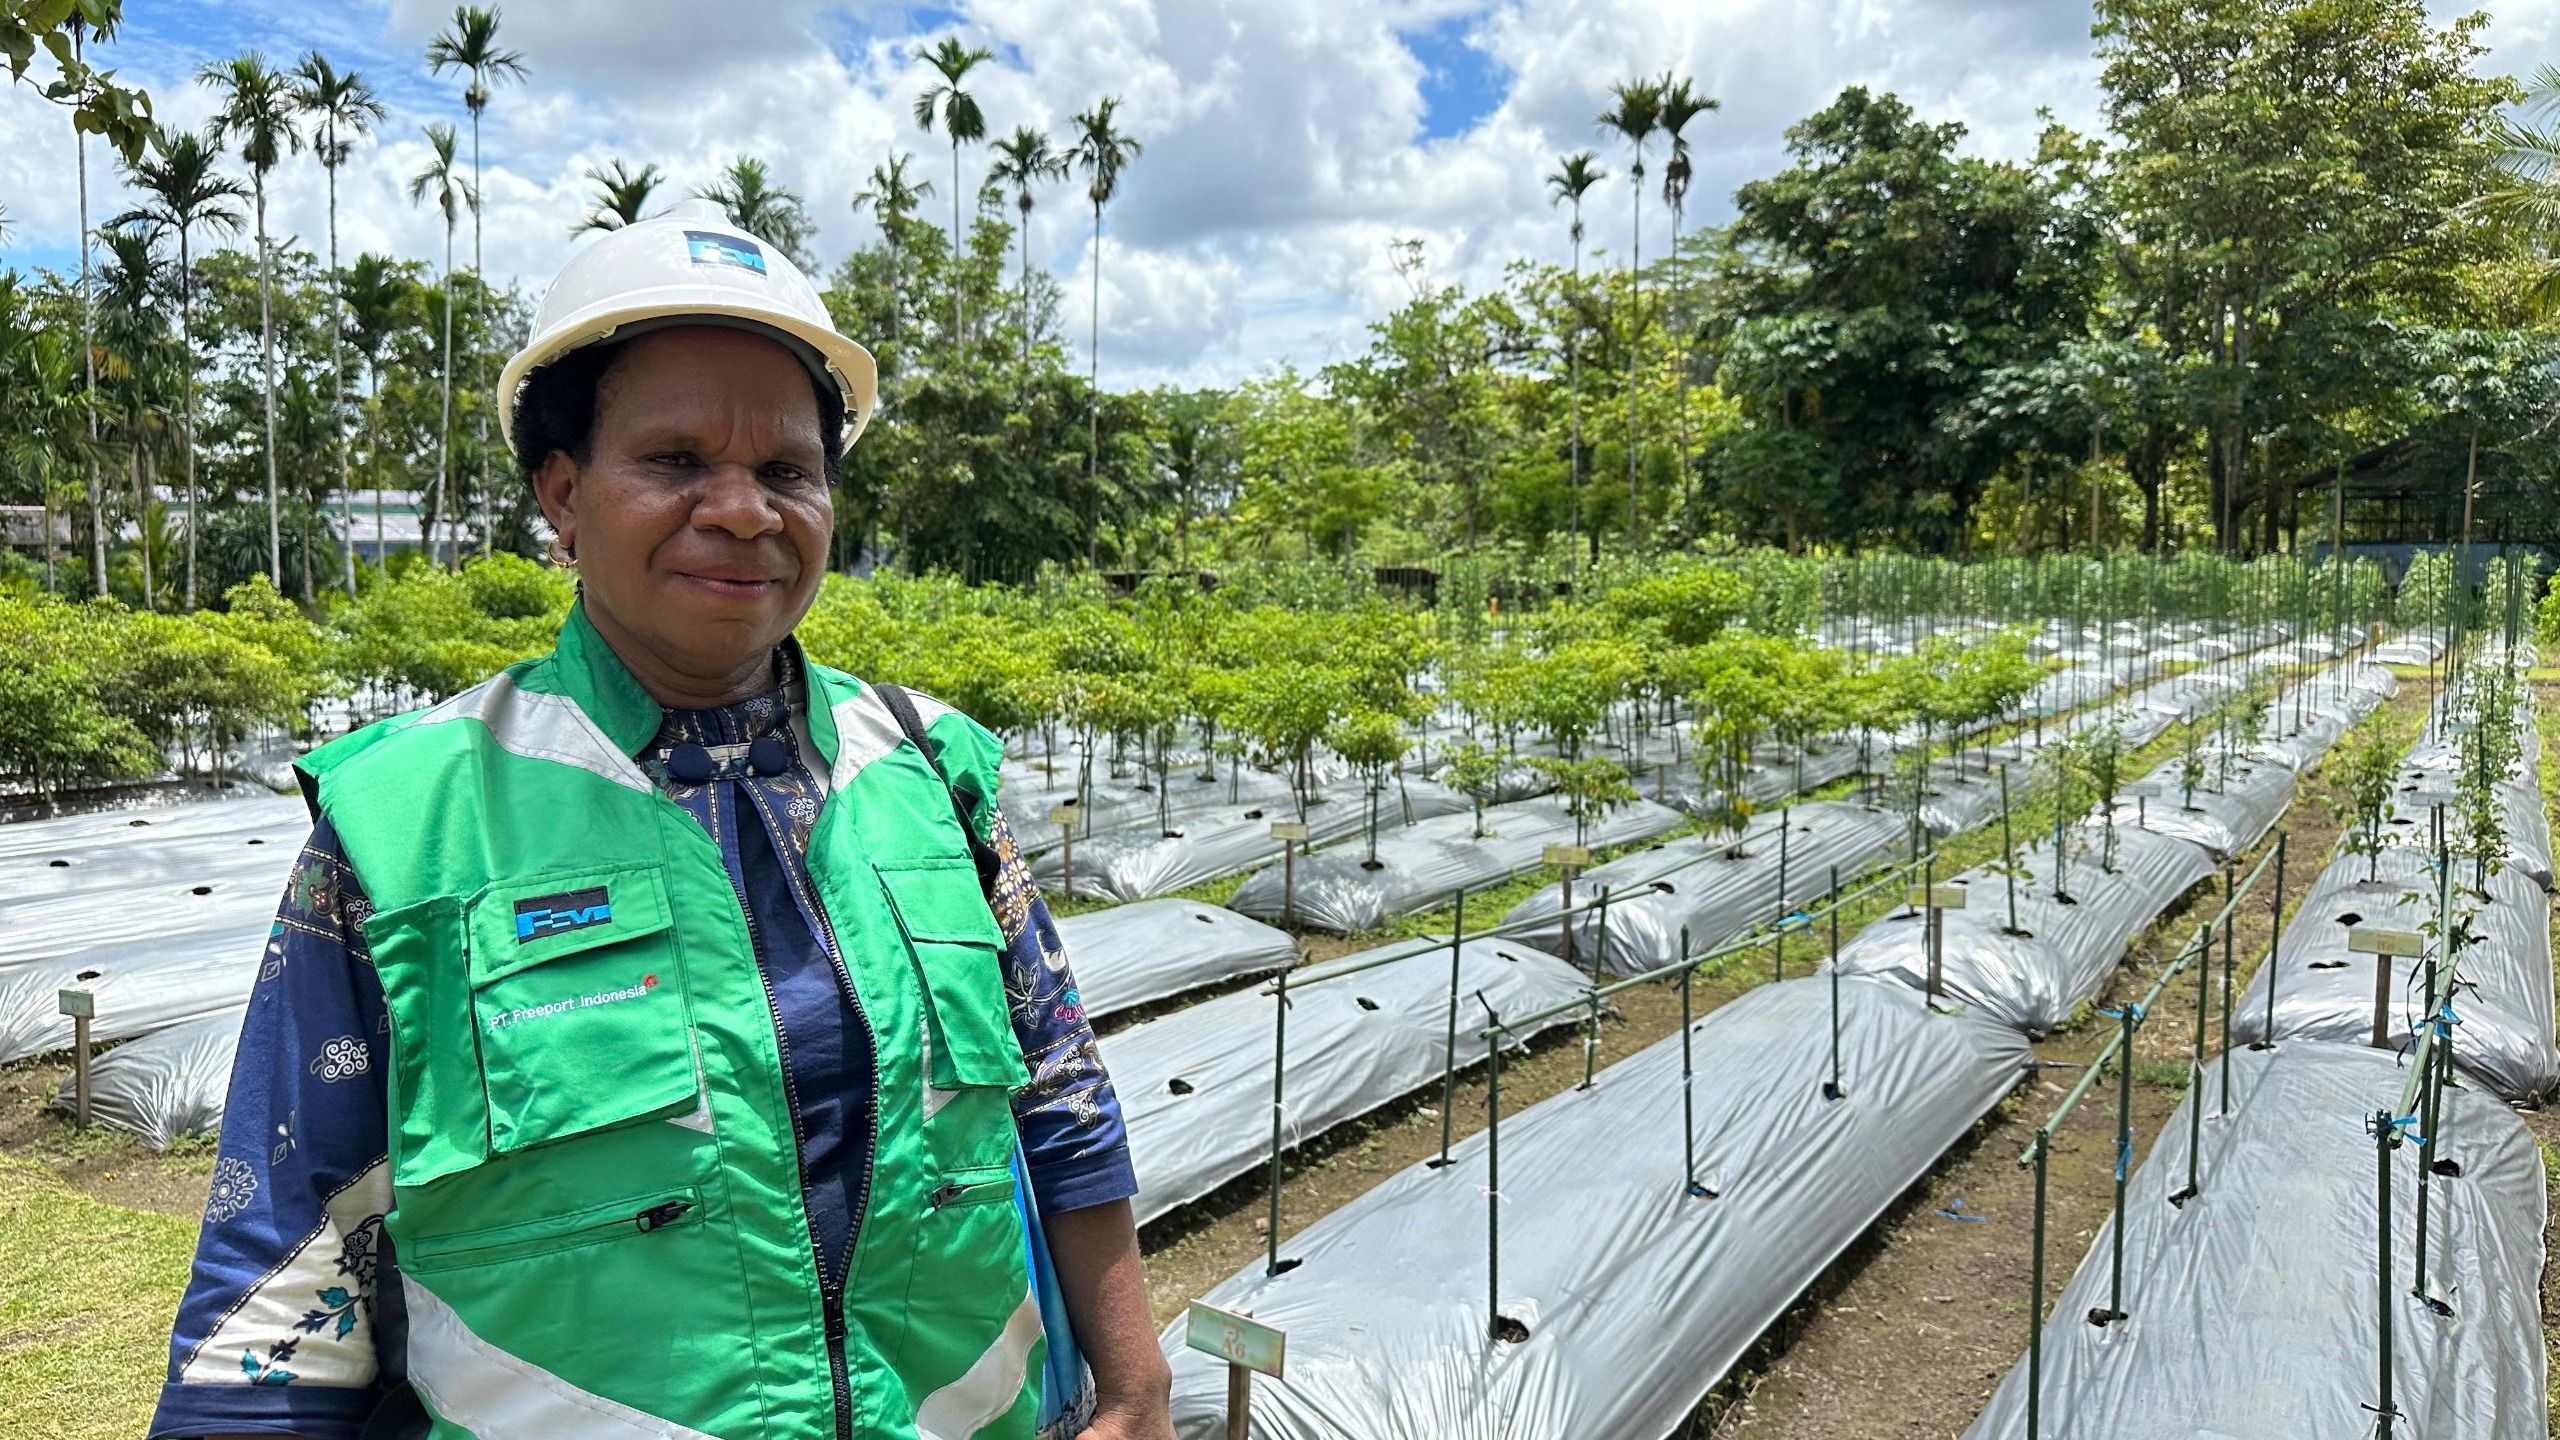 Tina Komangal, perempuan Suku Amungme, asal Kampung Waa Banti, Distrik Tembagapura, Mimika, sejak 2012 bekerja sebagai kontraktor di PT Freeport Indonesia (PTFI). Ia bersama delapan karyawannya mengelola pertanian dan penghijauan di area Pusat Reklamasi dan Keanekaragaman Hayati PTFI.